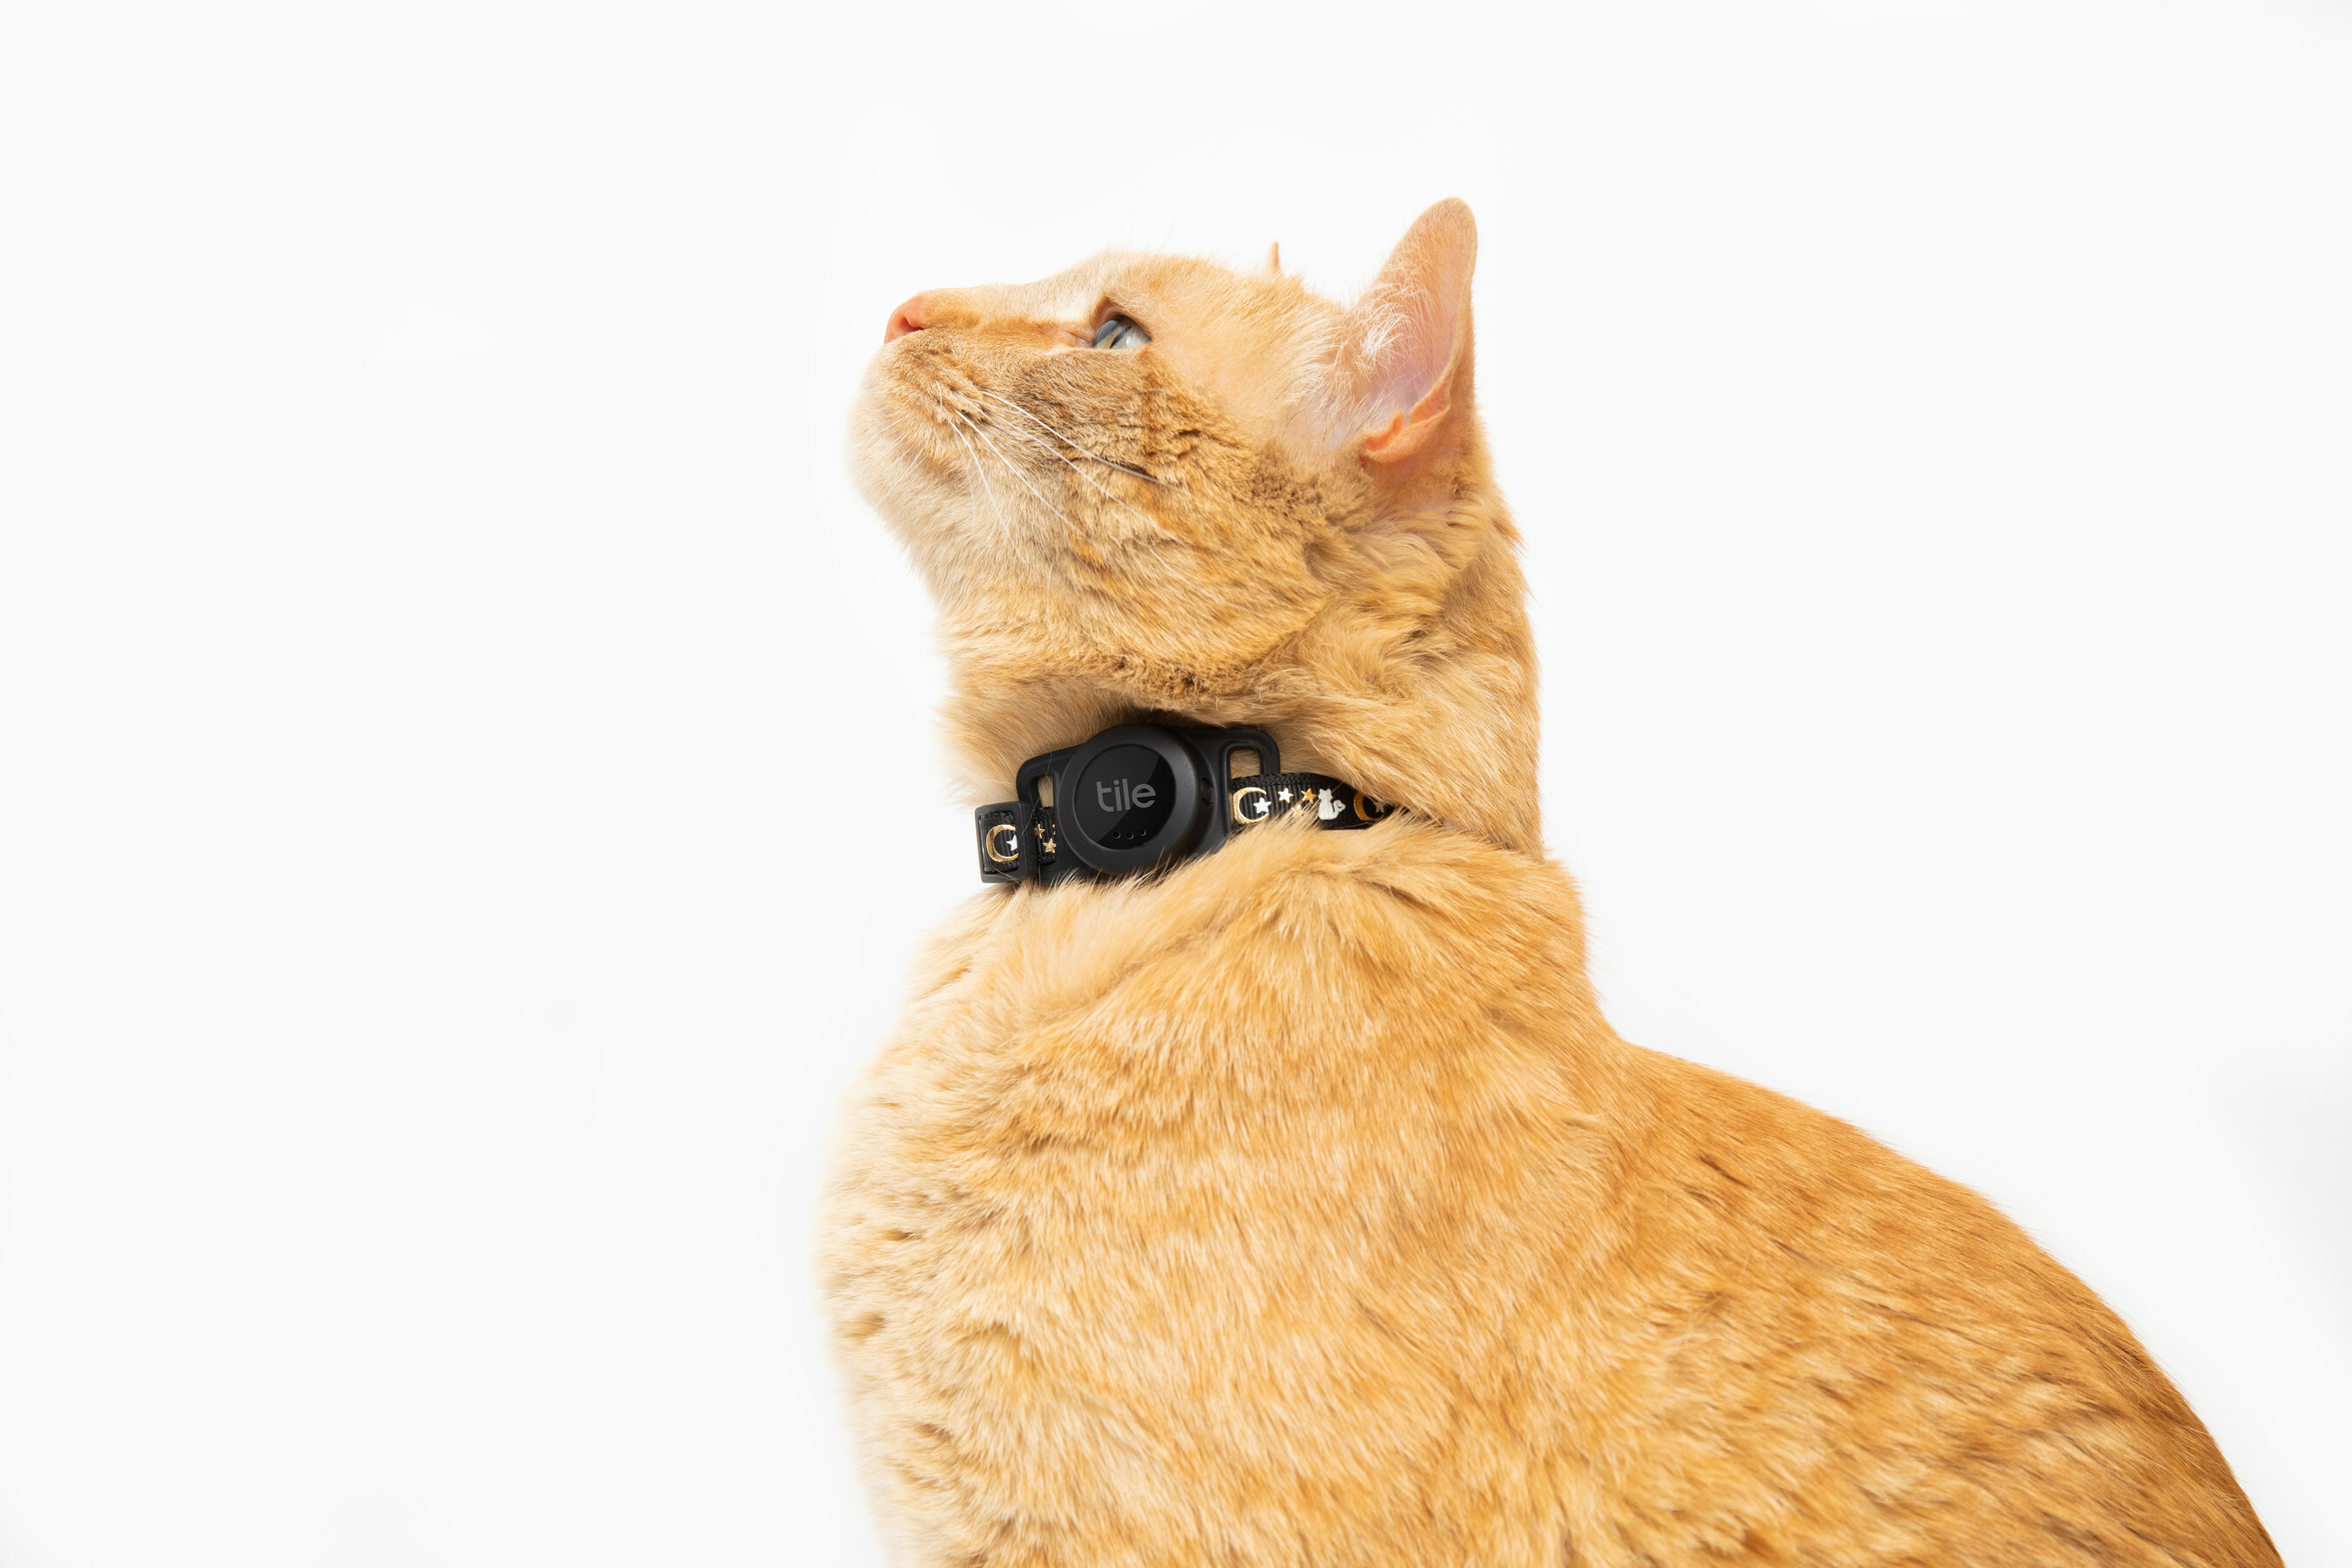 Lokalizator na rudym kocie (źródło: Tile Life360)